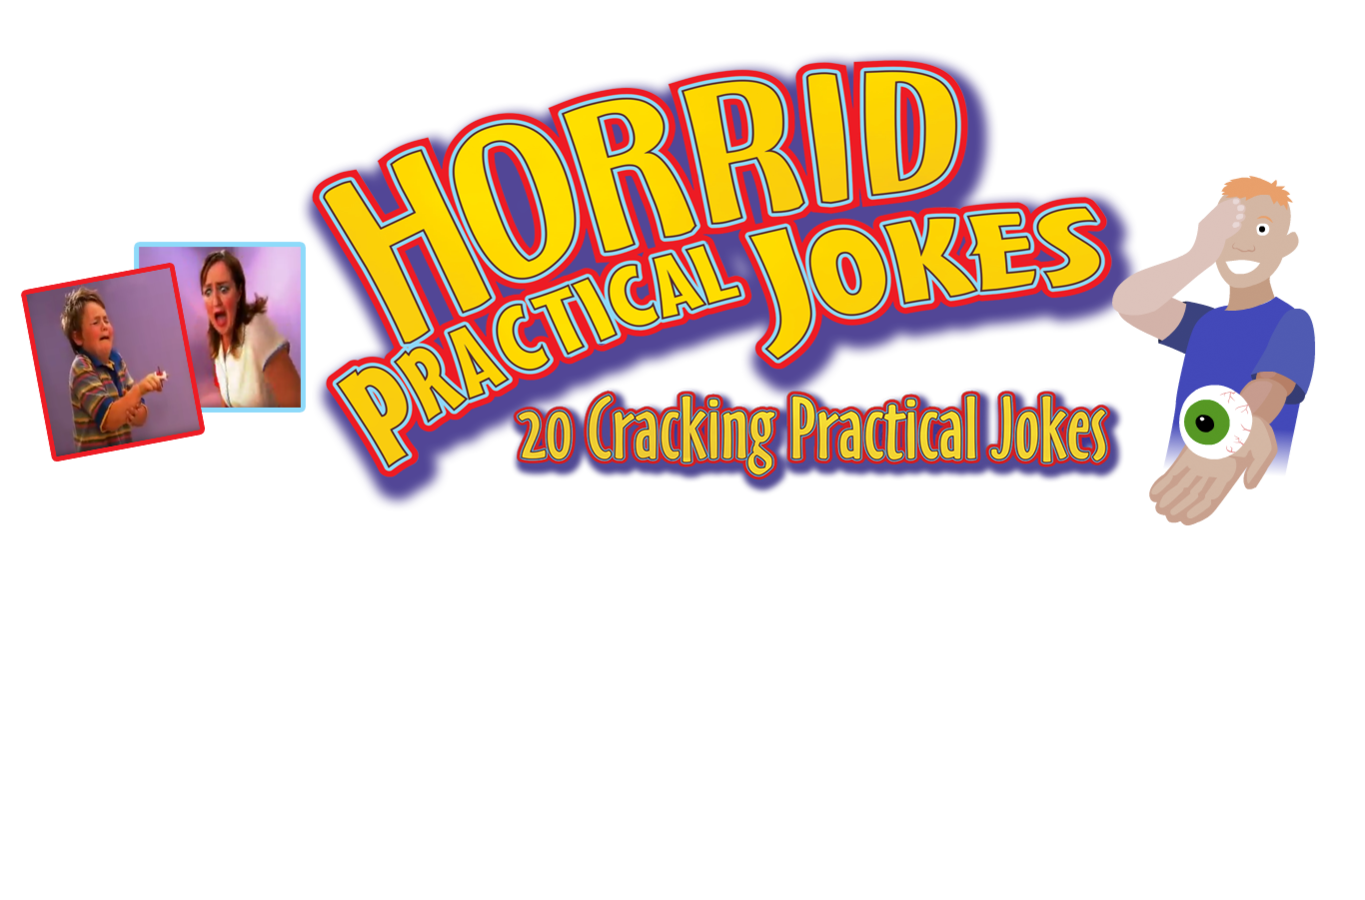 Drumond Park Horrid Practical Jokes 